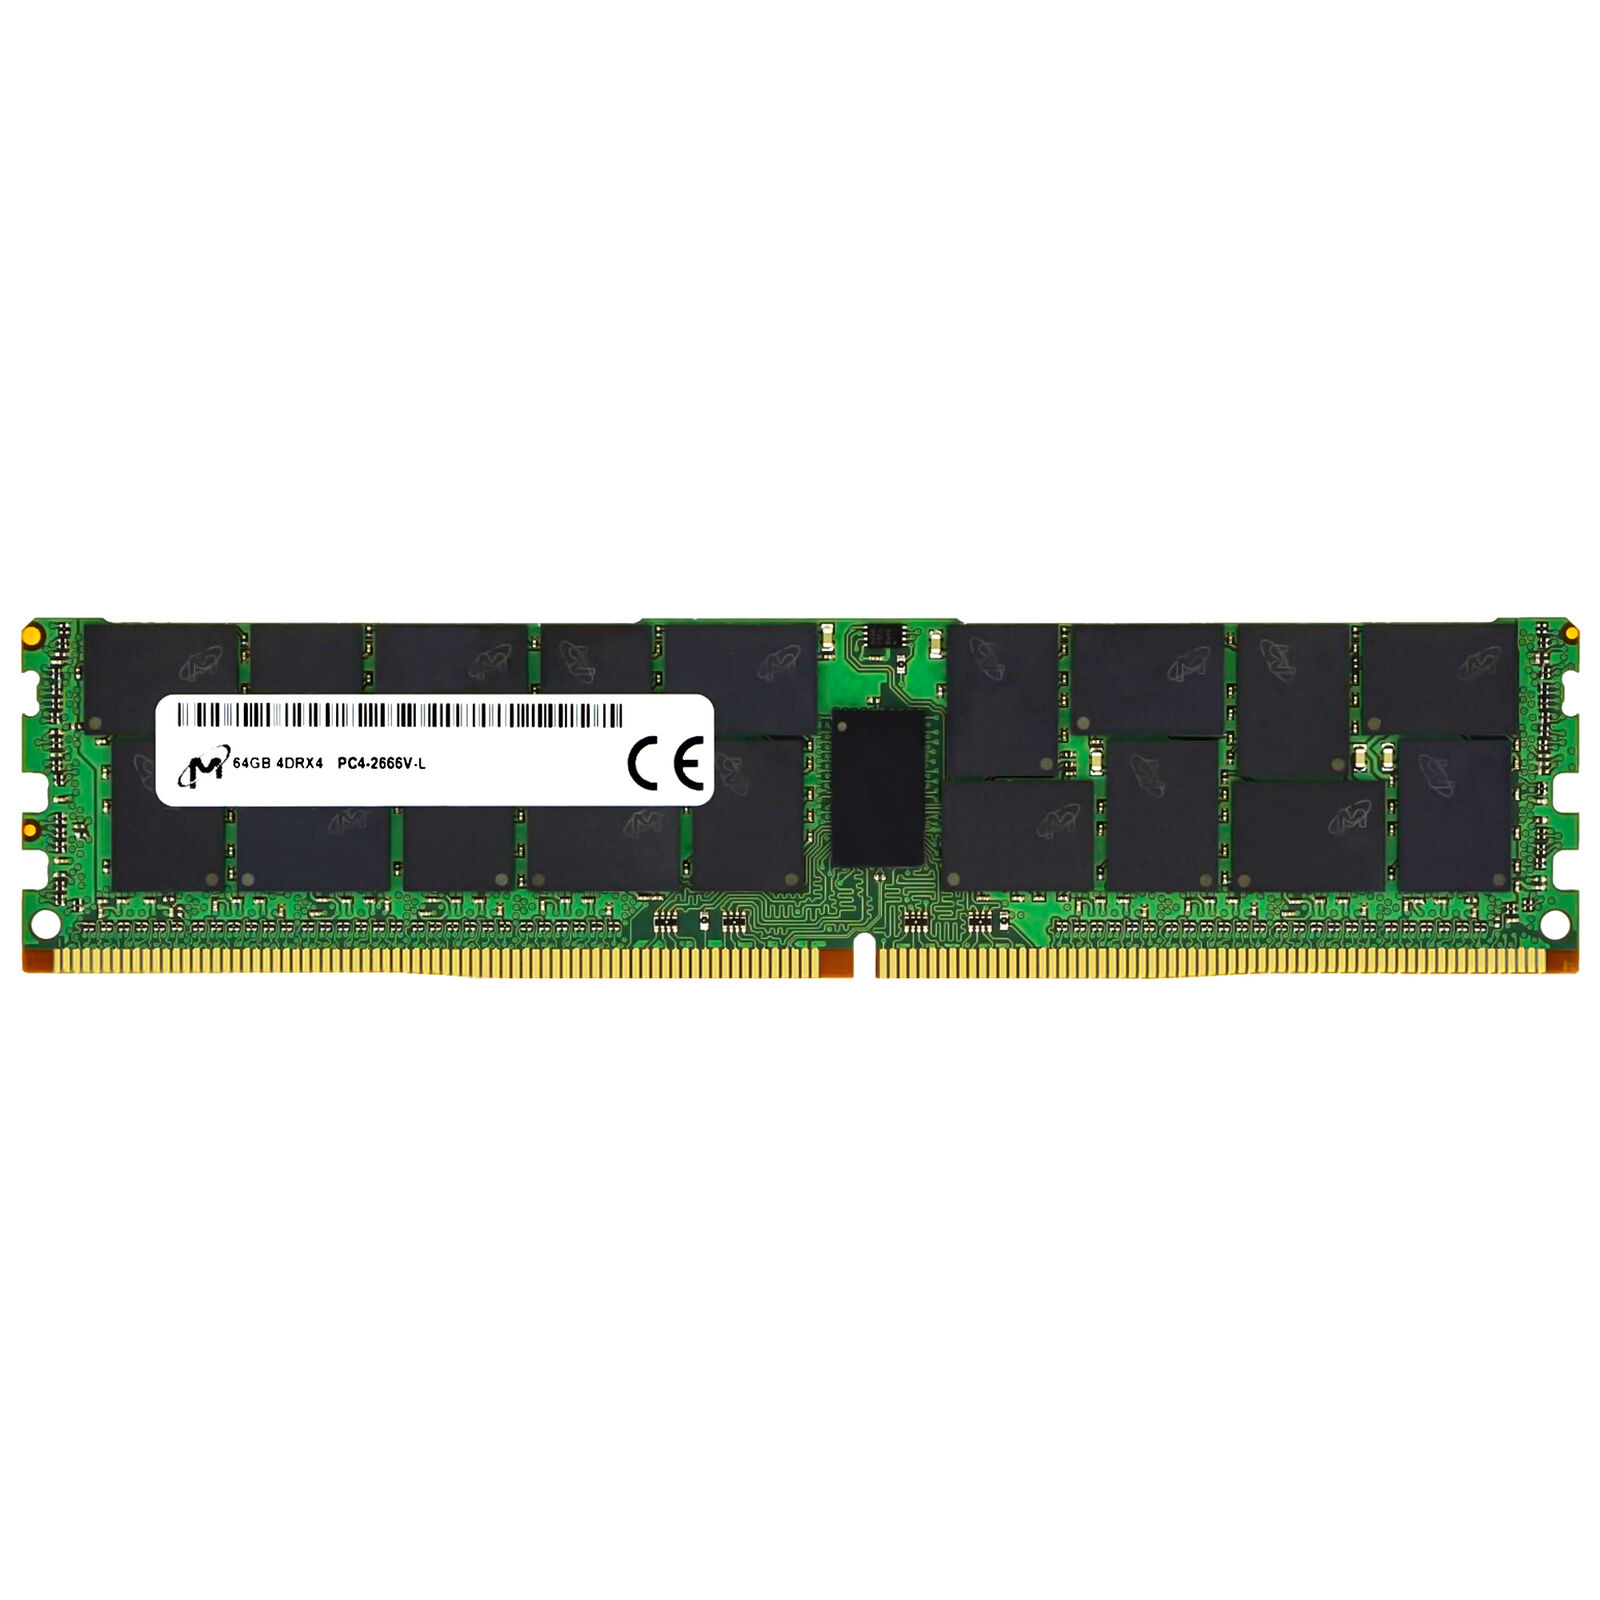 Micron 64GB 4DRx4 PC4-2666V LRDIMM DDR4-21300 ECC MTA72ASS8G72LZ-2G6 Memory RAM